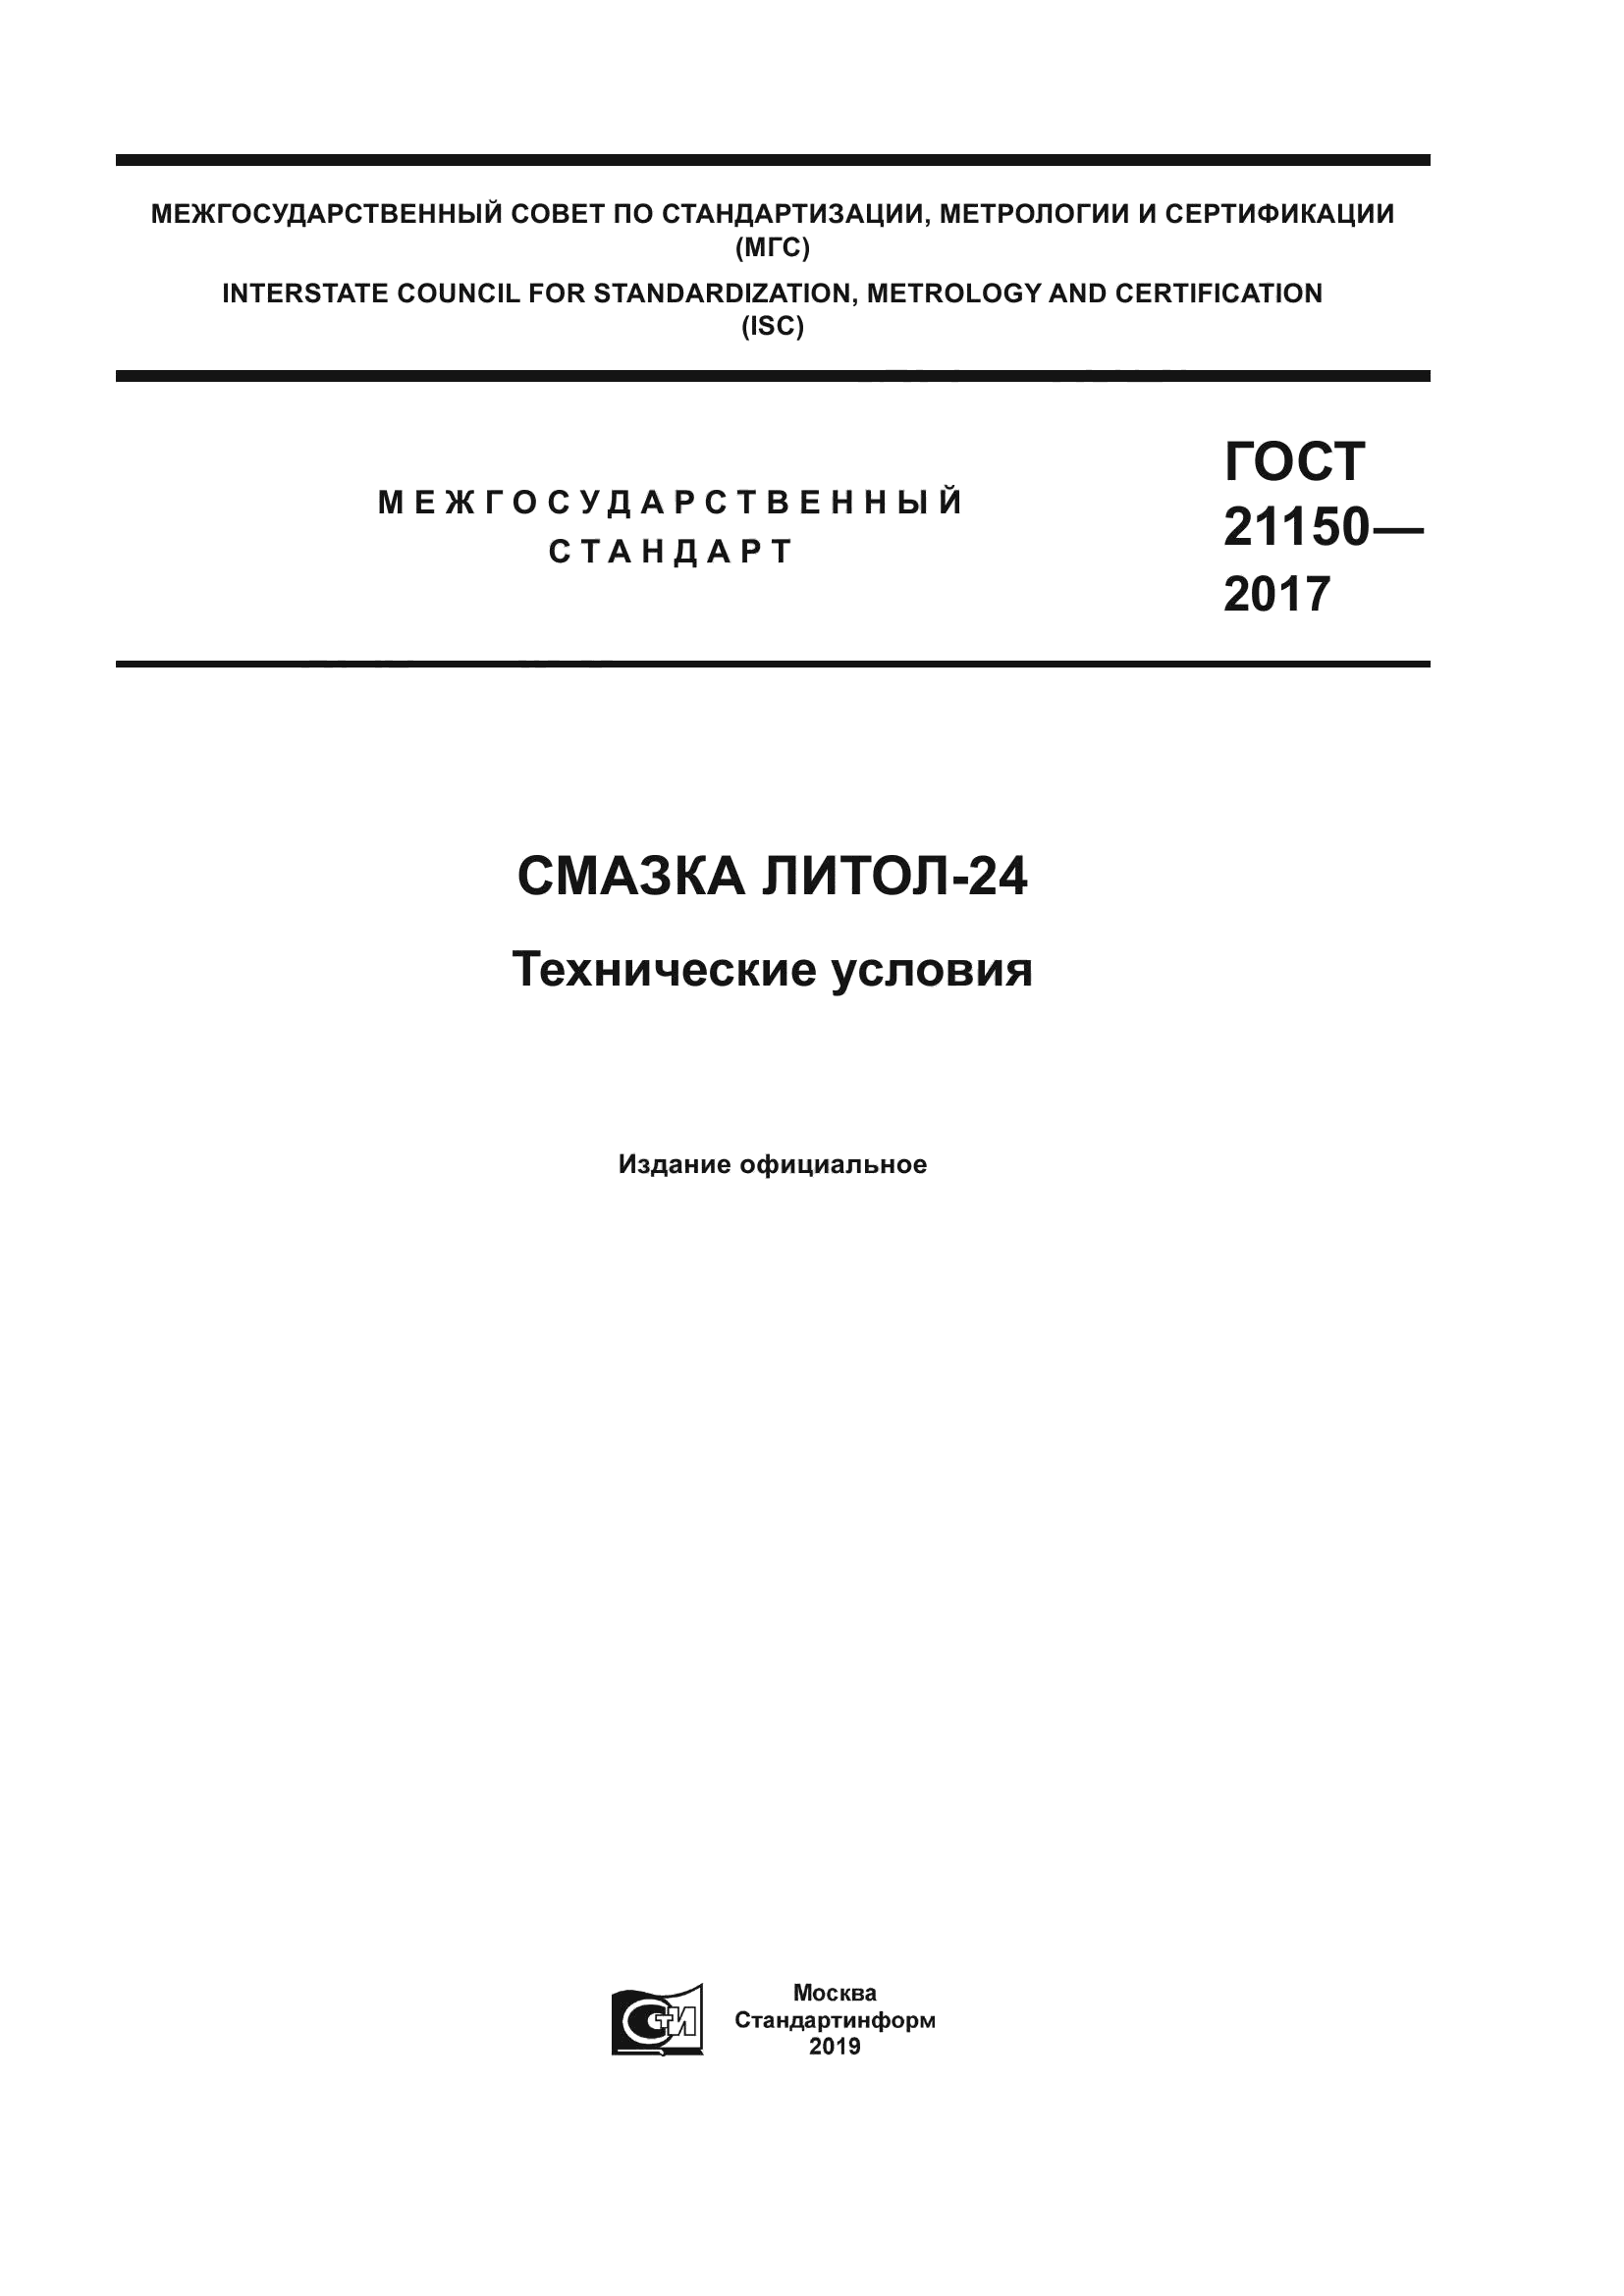 ГОСТ 21150-2017